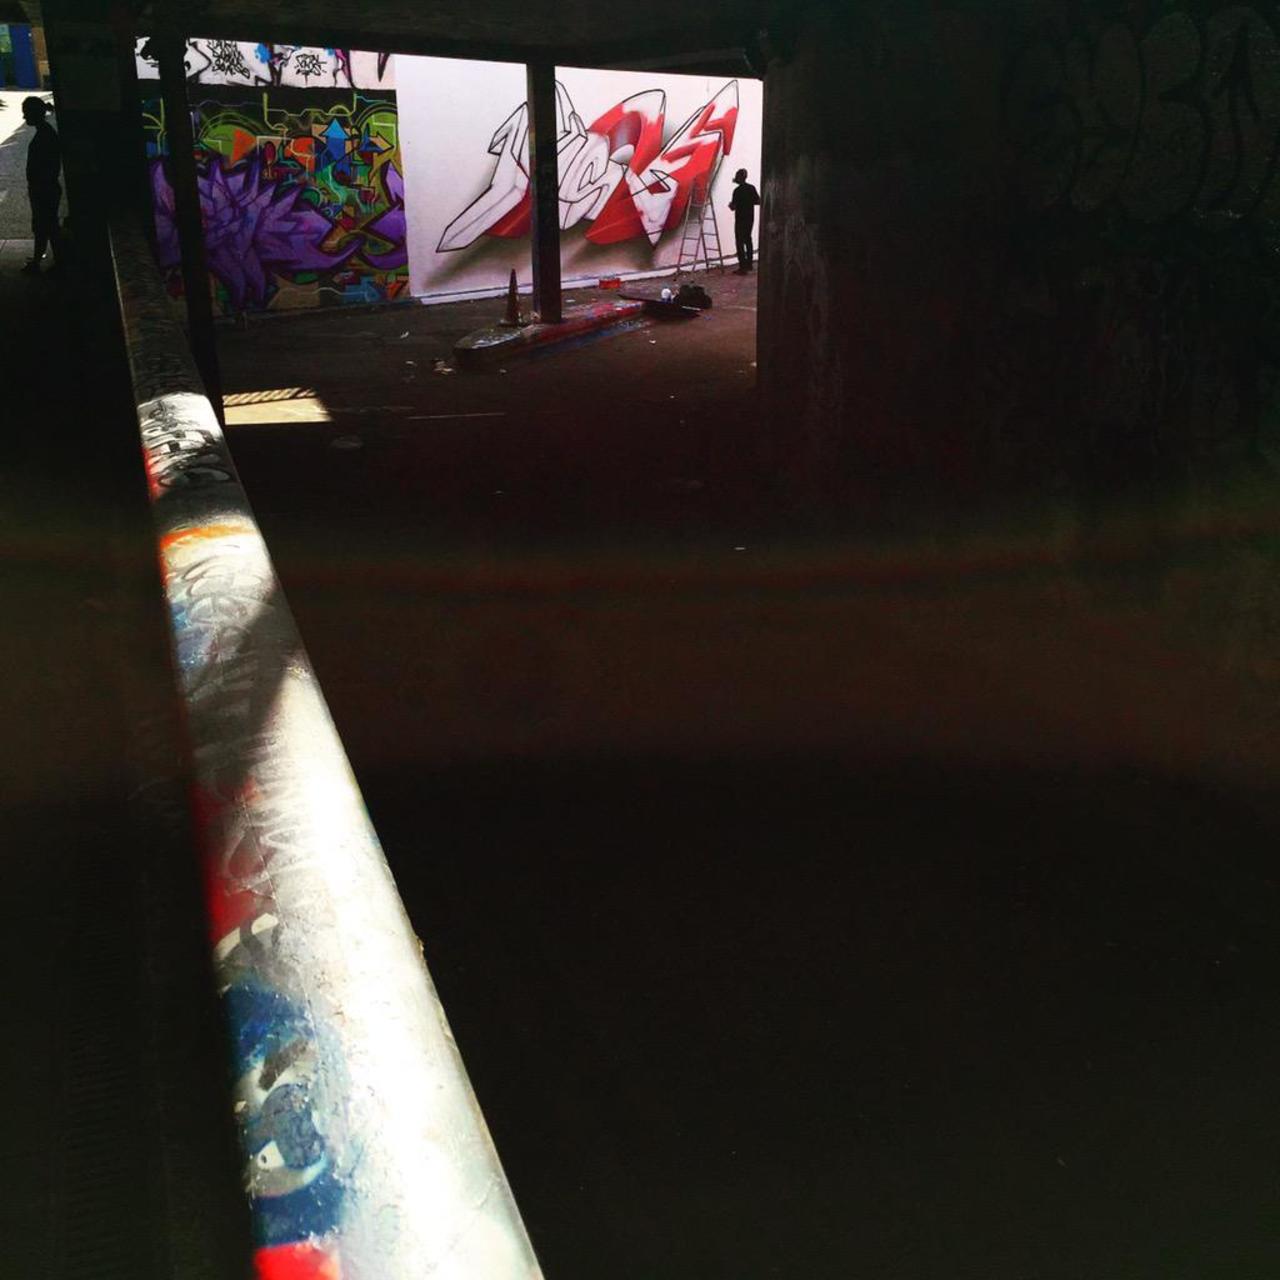 RT @eoin_heffernan: Spotted some new work being developed in #Graffiti Tunnel, Lower Marsh #streetart #London #spraypaint http://t.co/ZTctB3oE0D